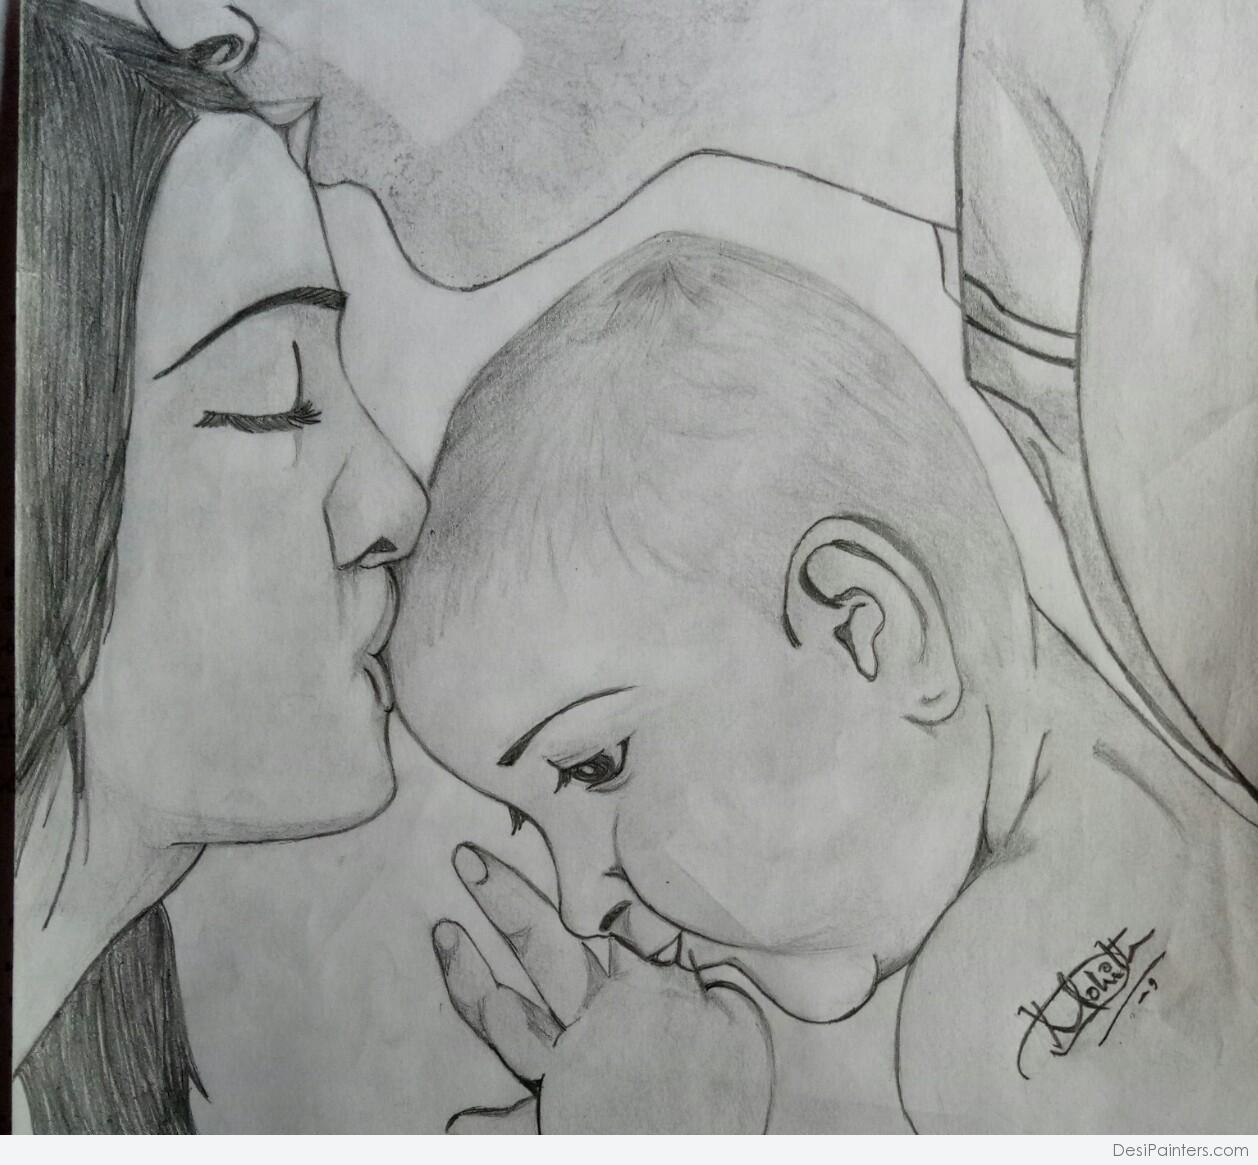 Pencil Sketch Of Family Love | DesiPainters.com